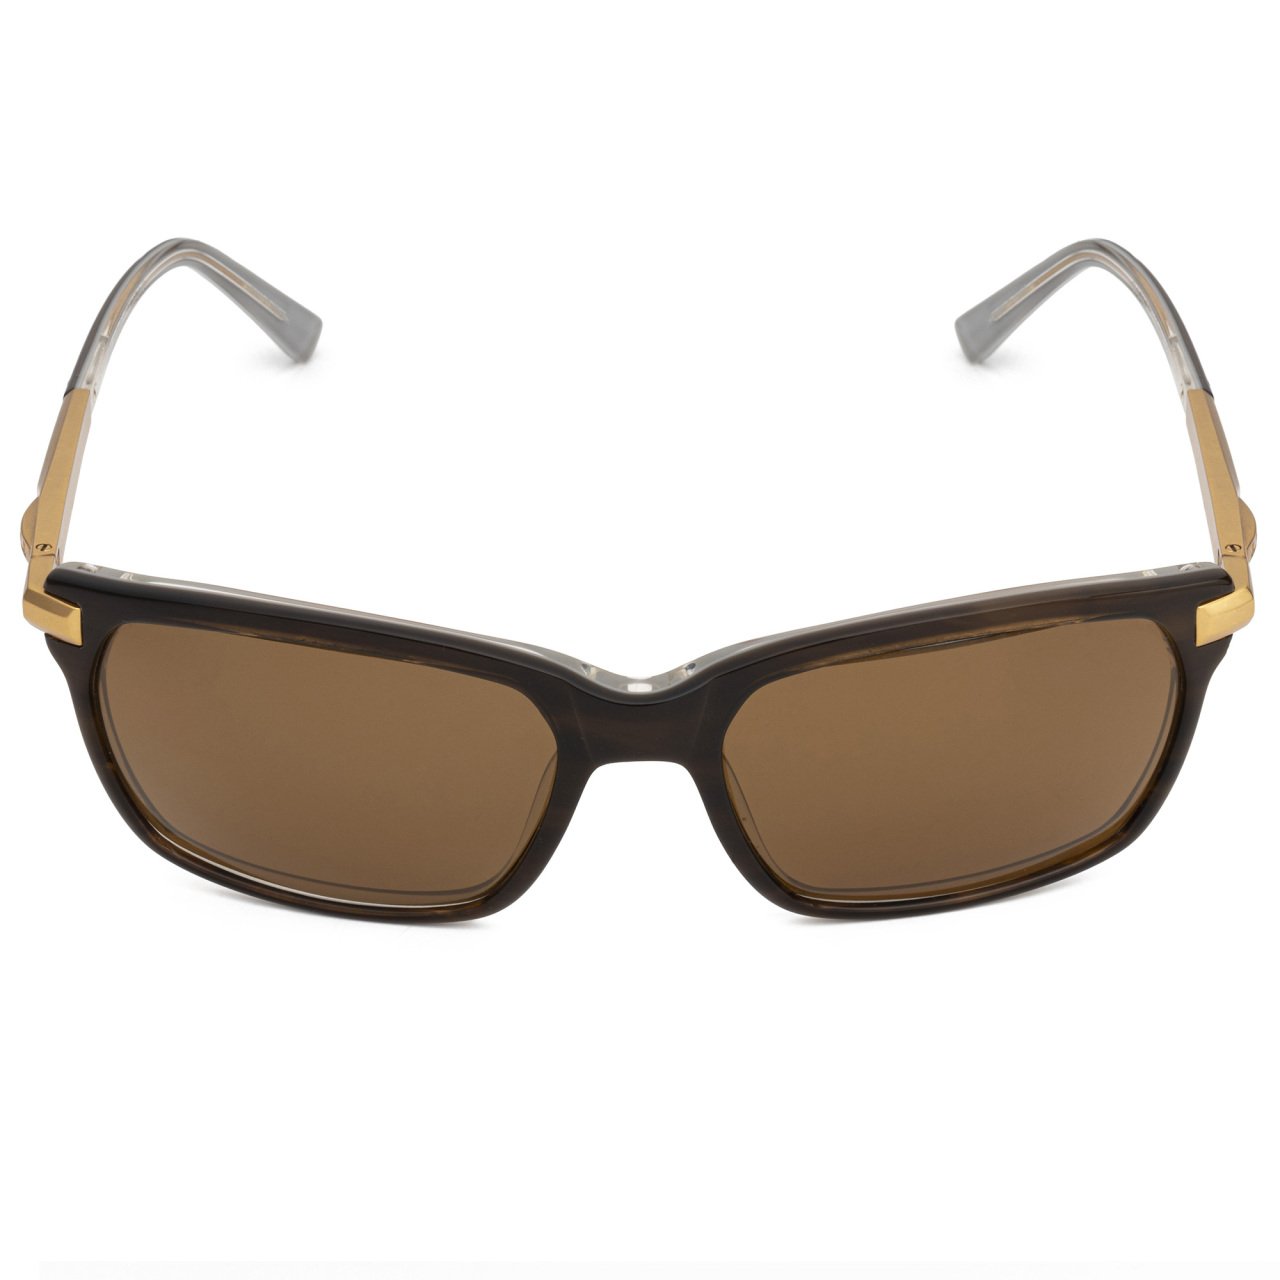 Zilli Ingmar Gold Men's Sunglasses